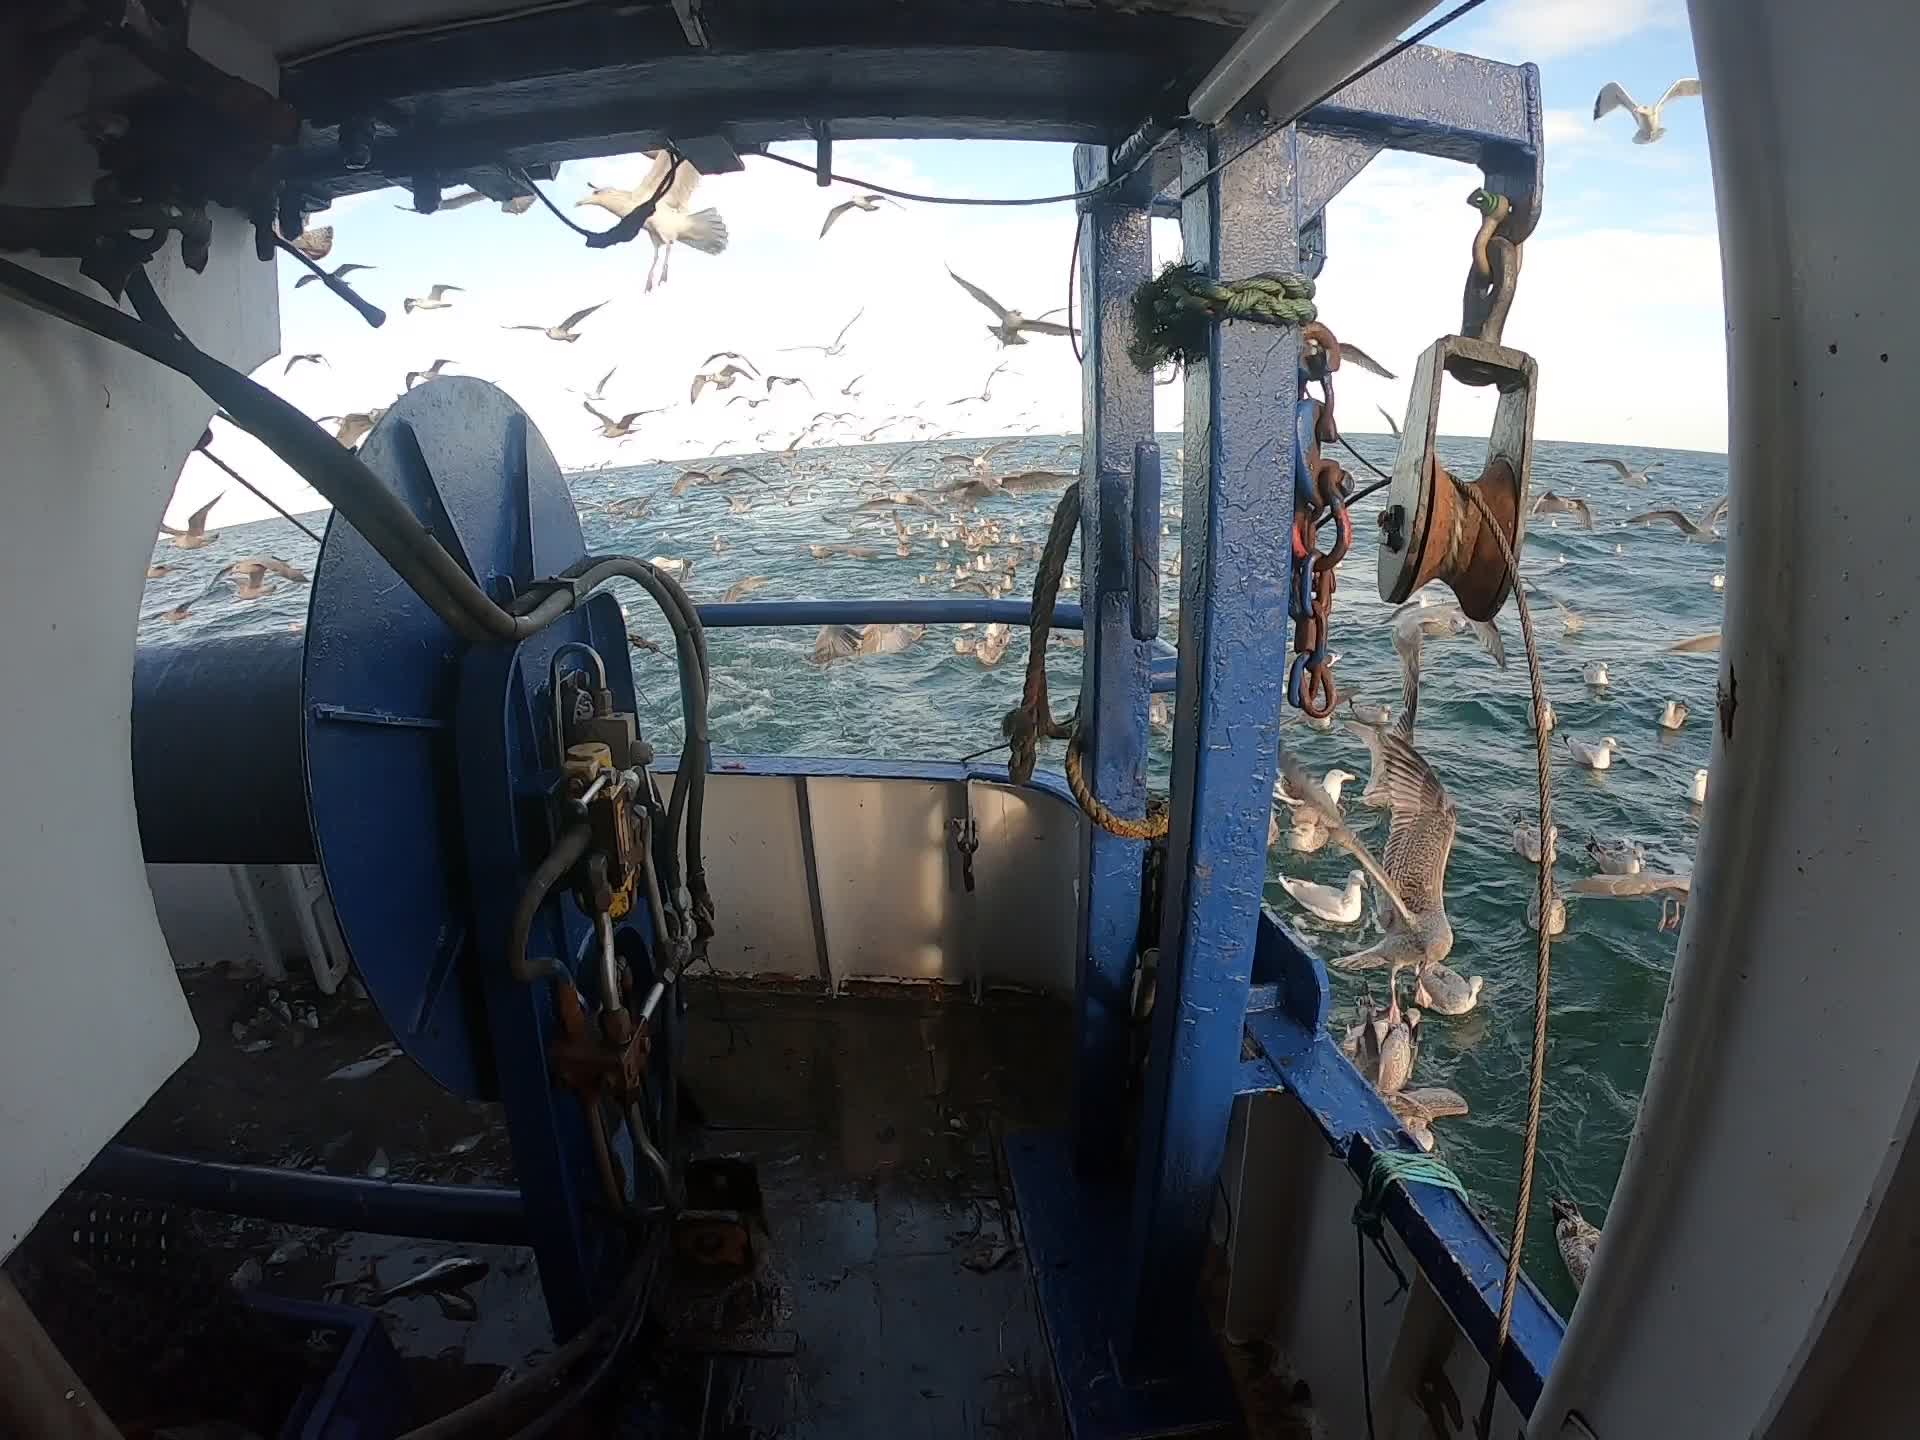 Seagulls follow a fishing trawler off the UK coastline